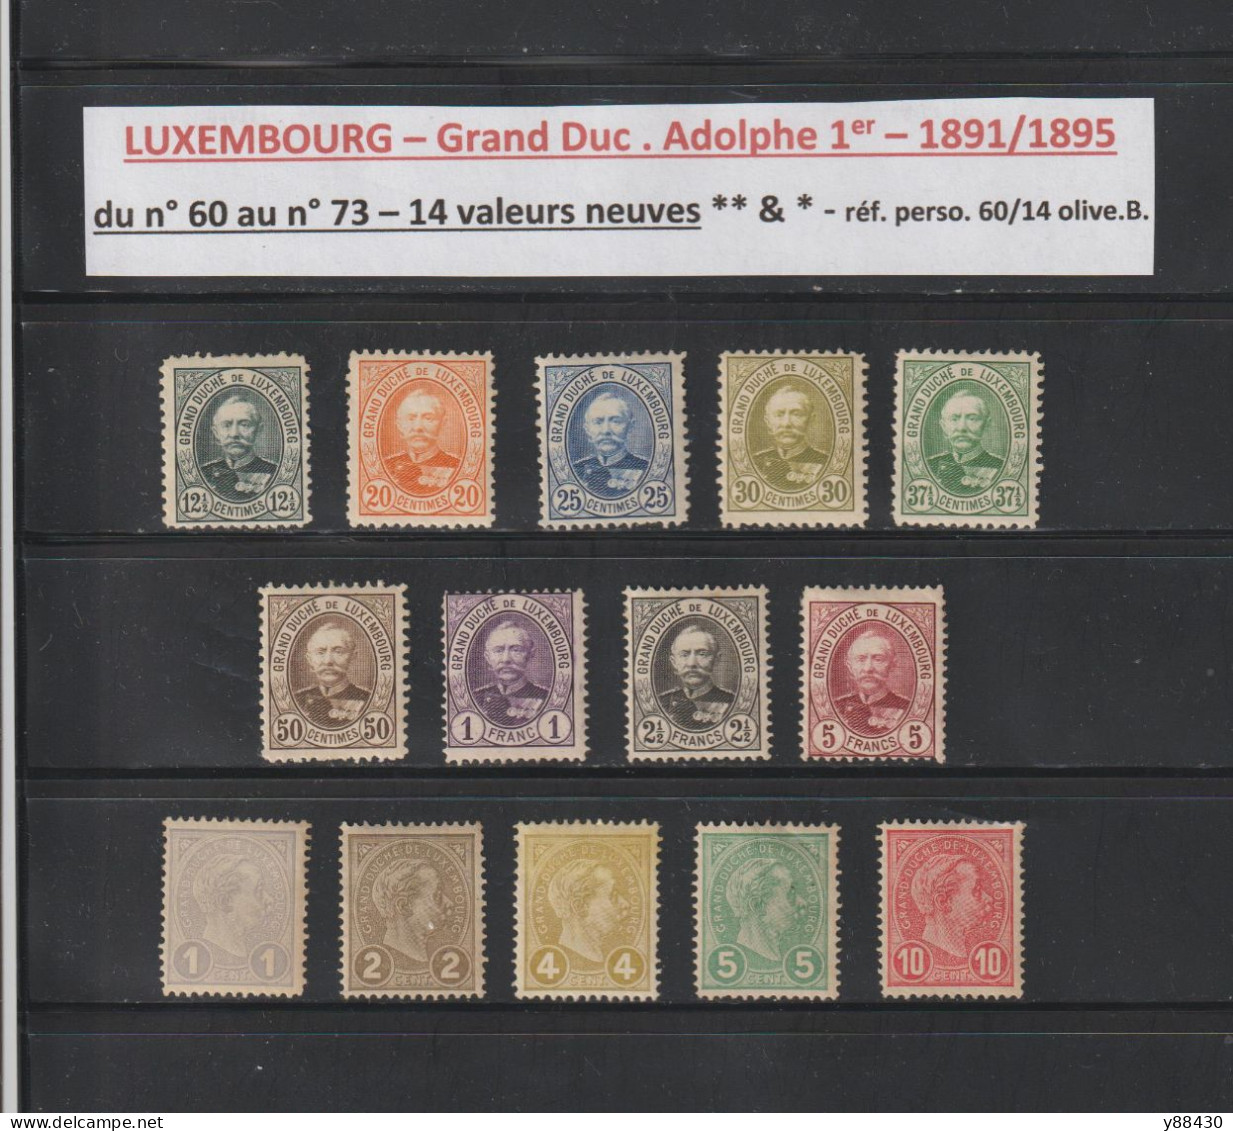 LUXEMBOURG - 60 à 73 De 1891/1895 - Neuf ** & *  -  14 Valeurs - Grand Duc Adolphe 1er - Face Et Profil - 2 Scan - 1891 Adolphe Front Side